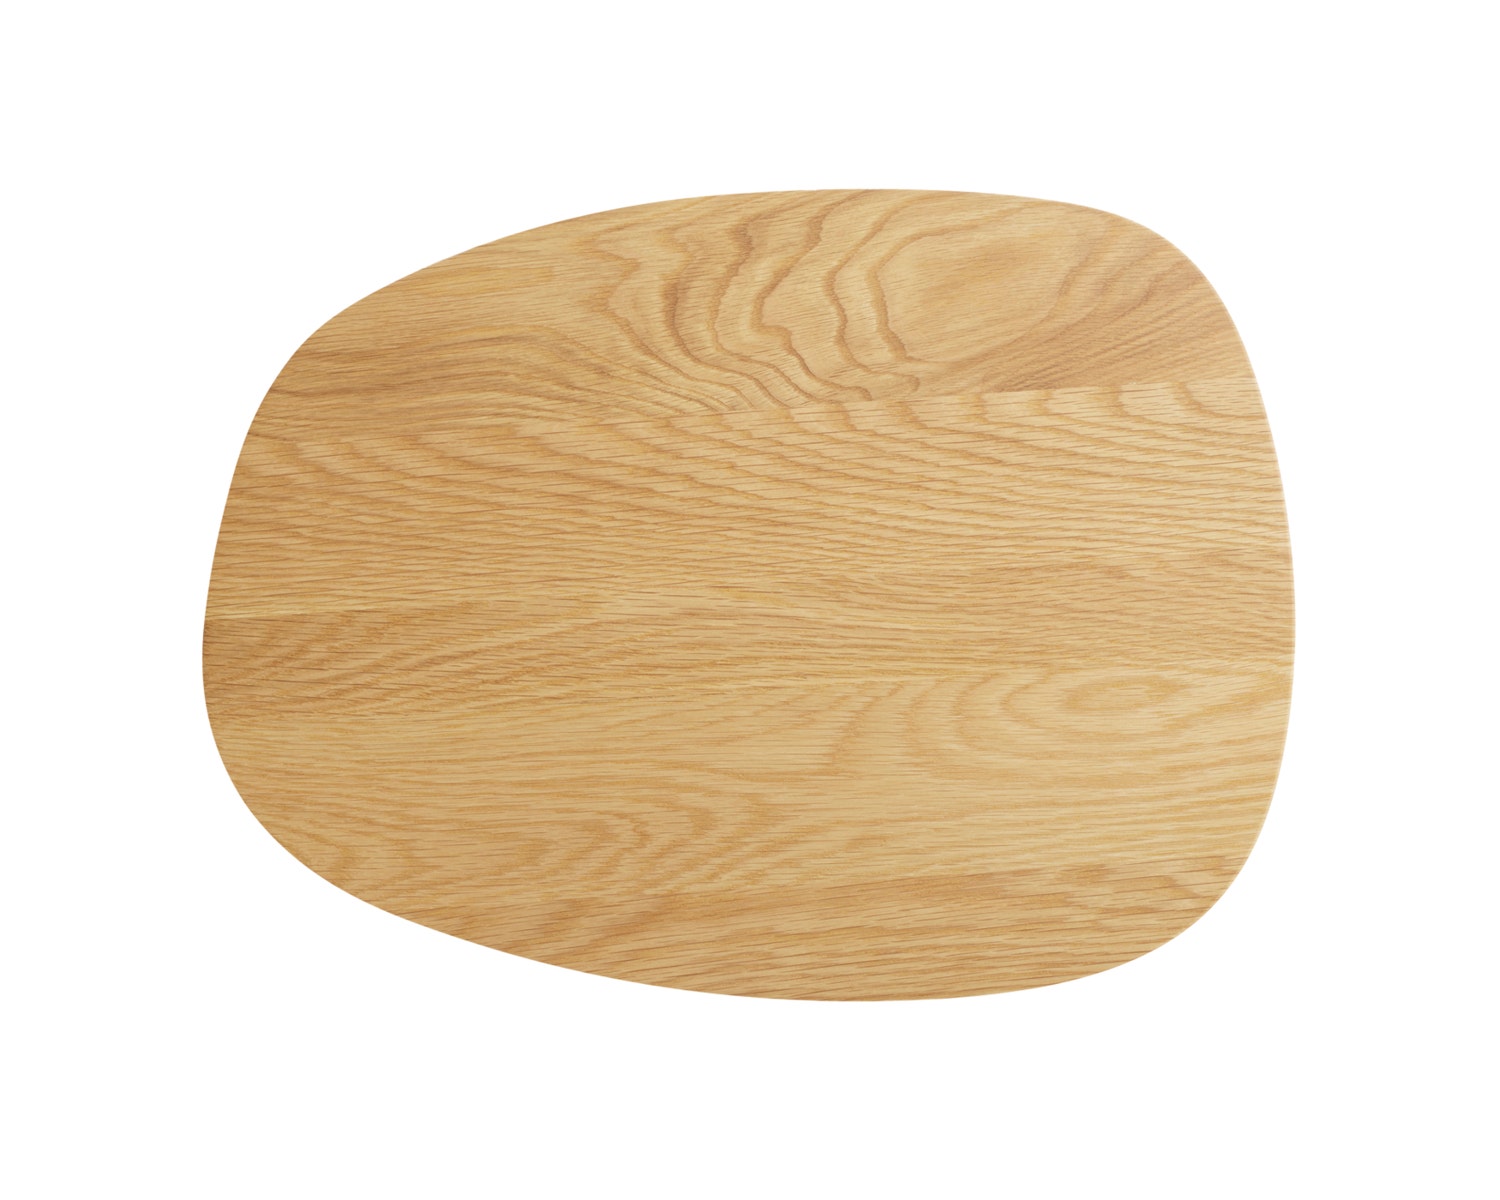 Swole Wood Table